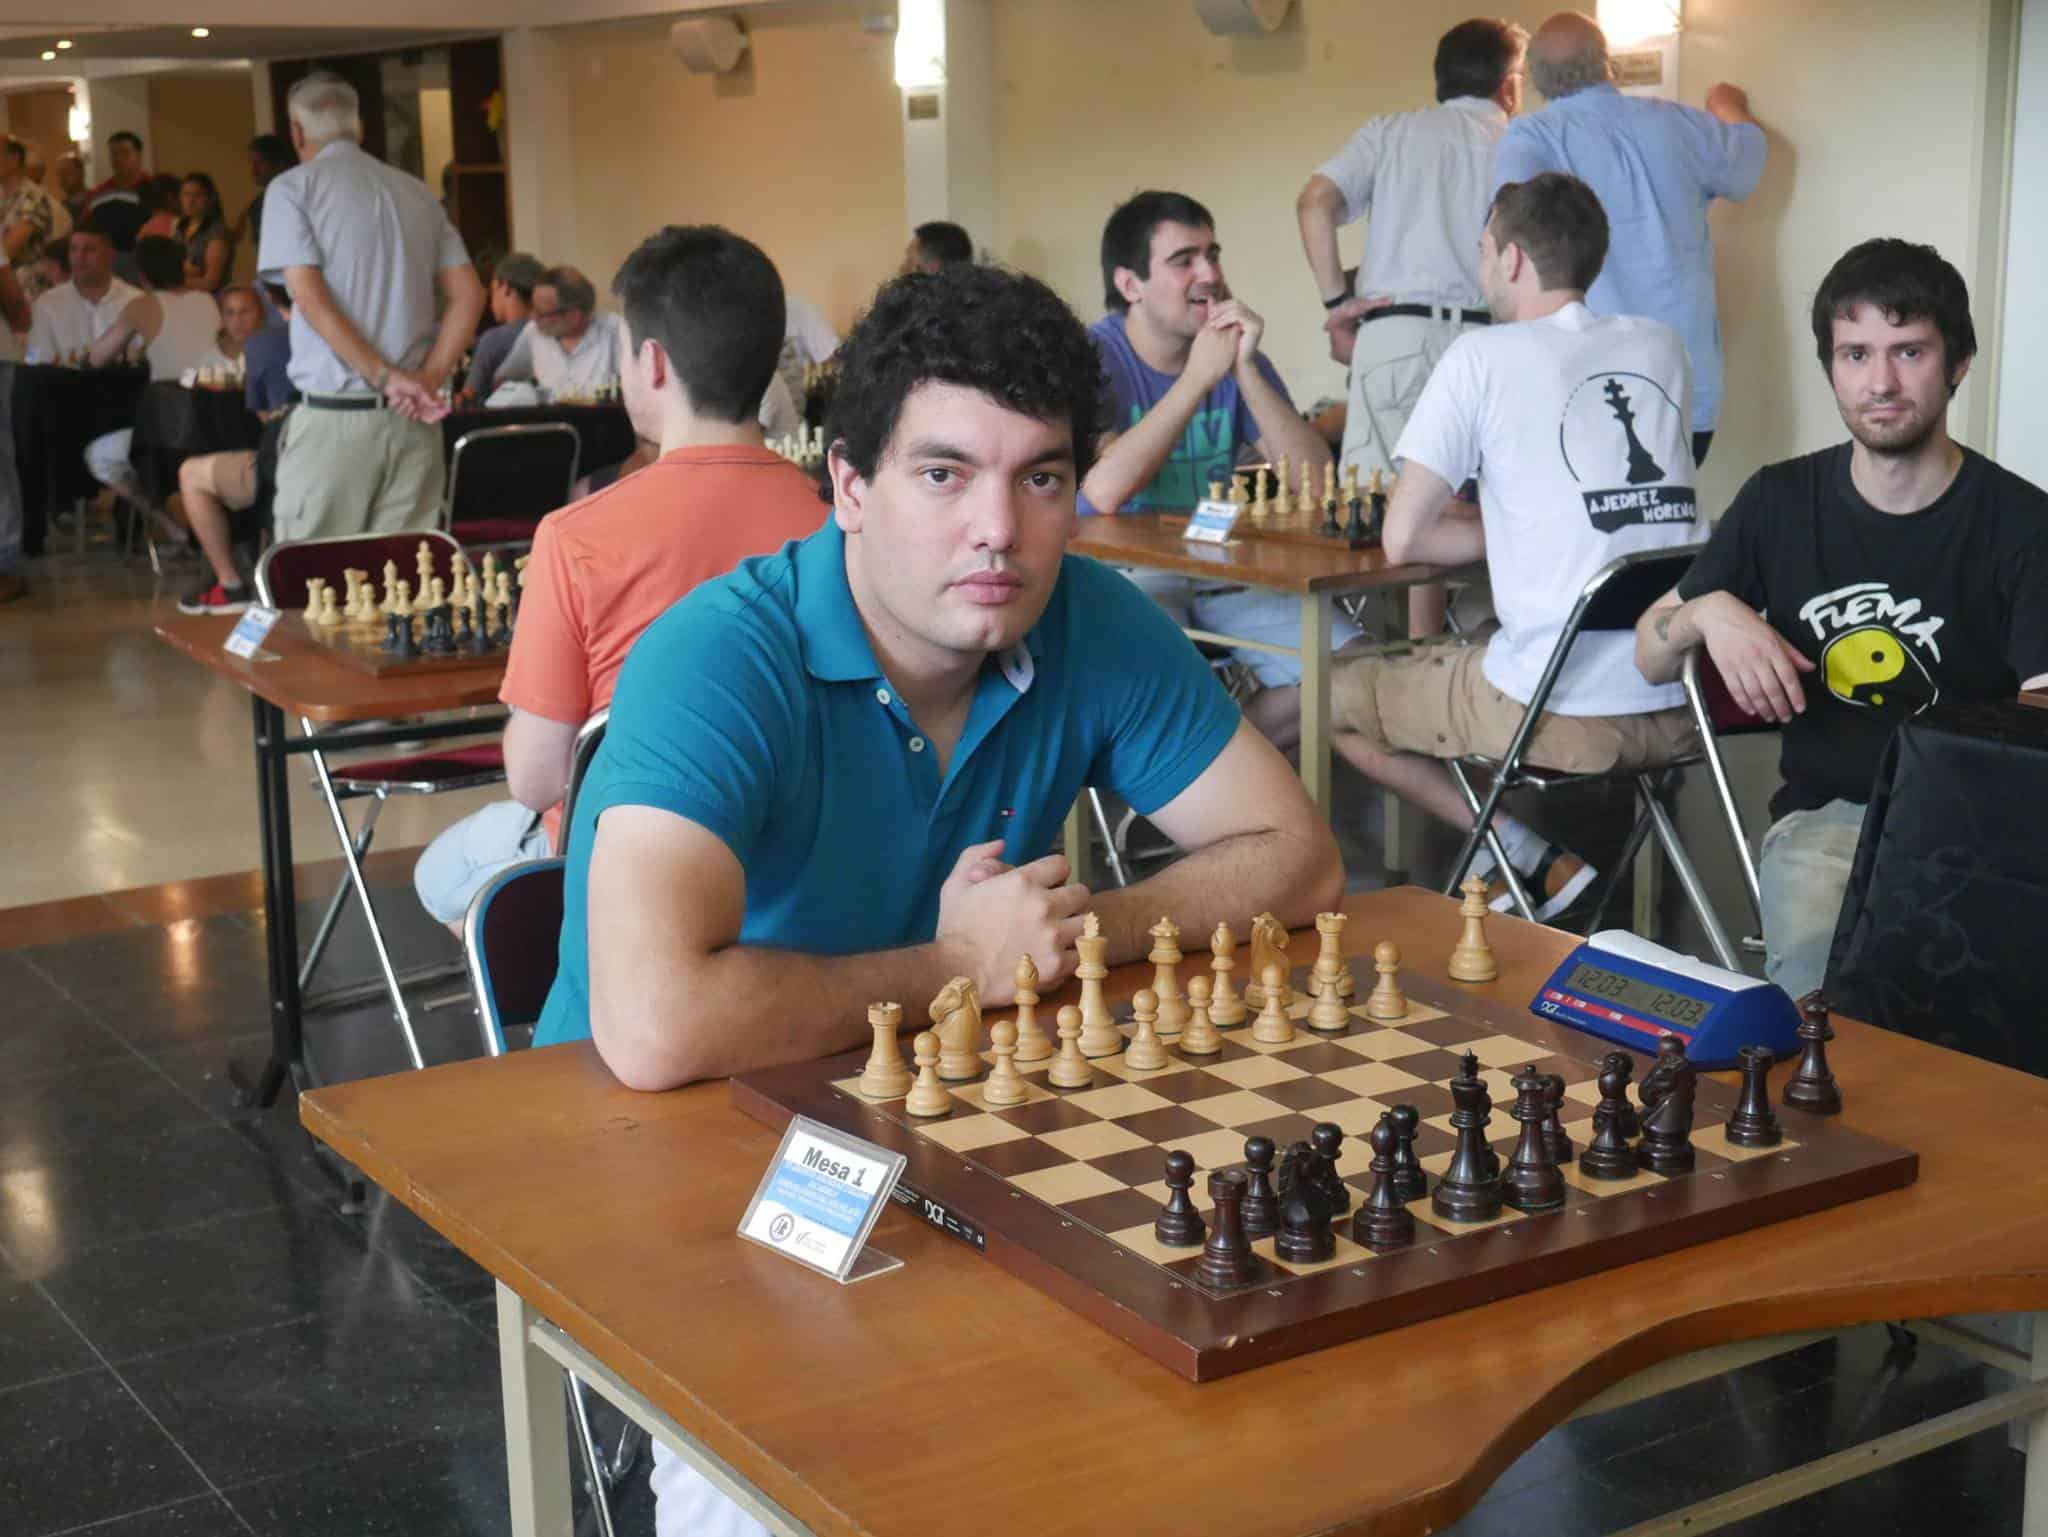 Un Joven de Hurlingham se consagró campeón iberoamericano de ajedrez